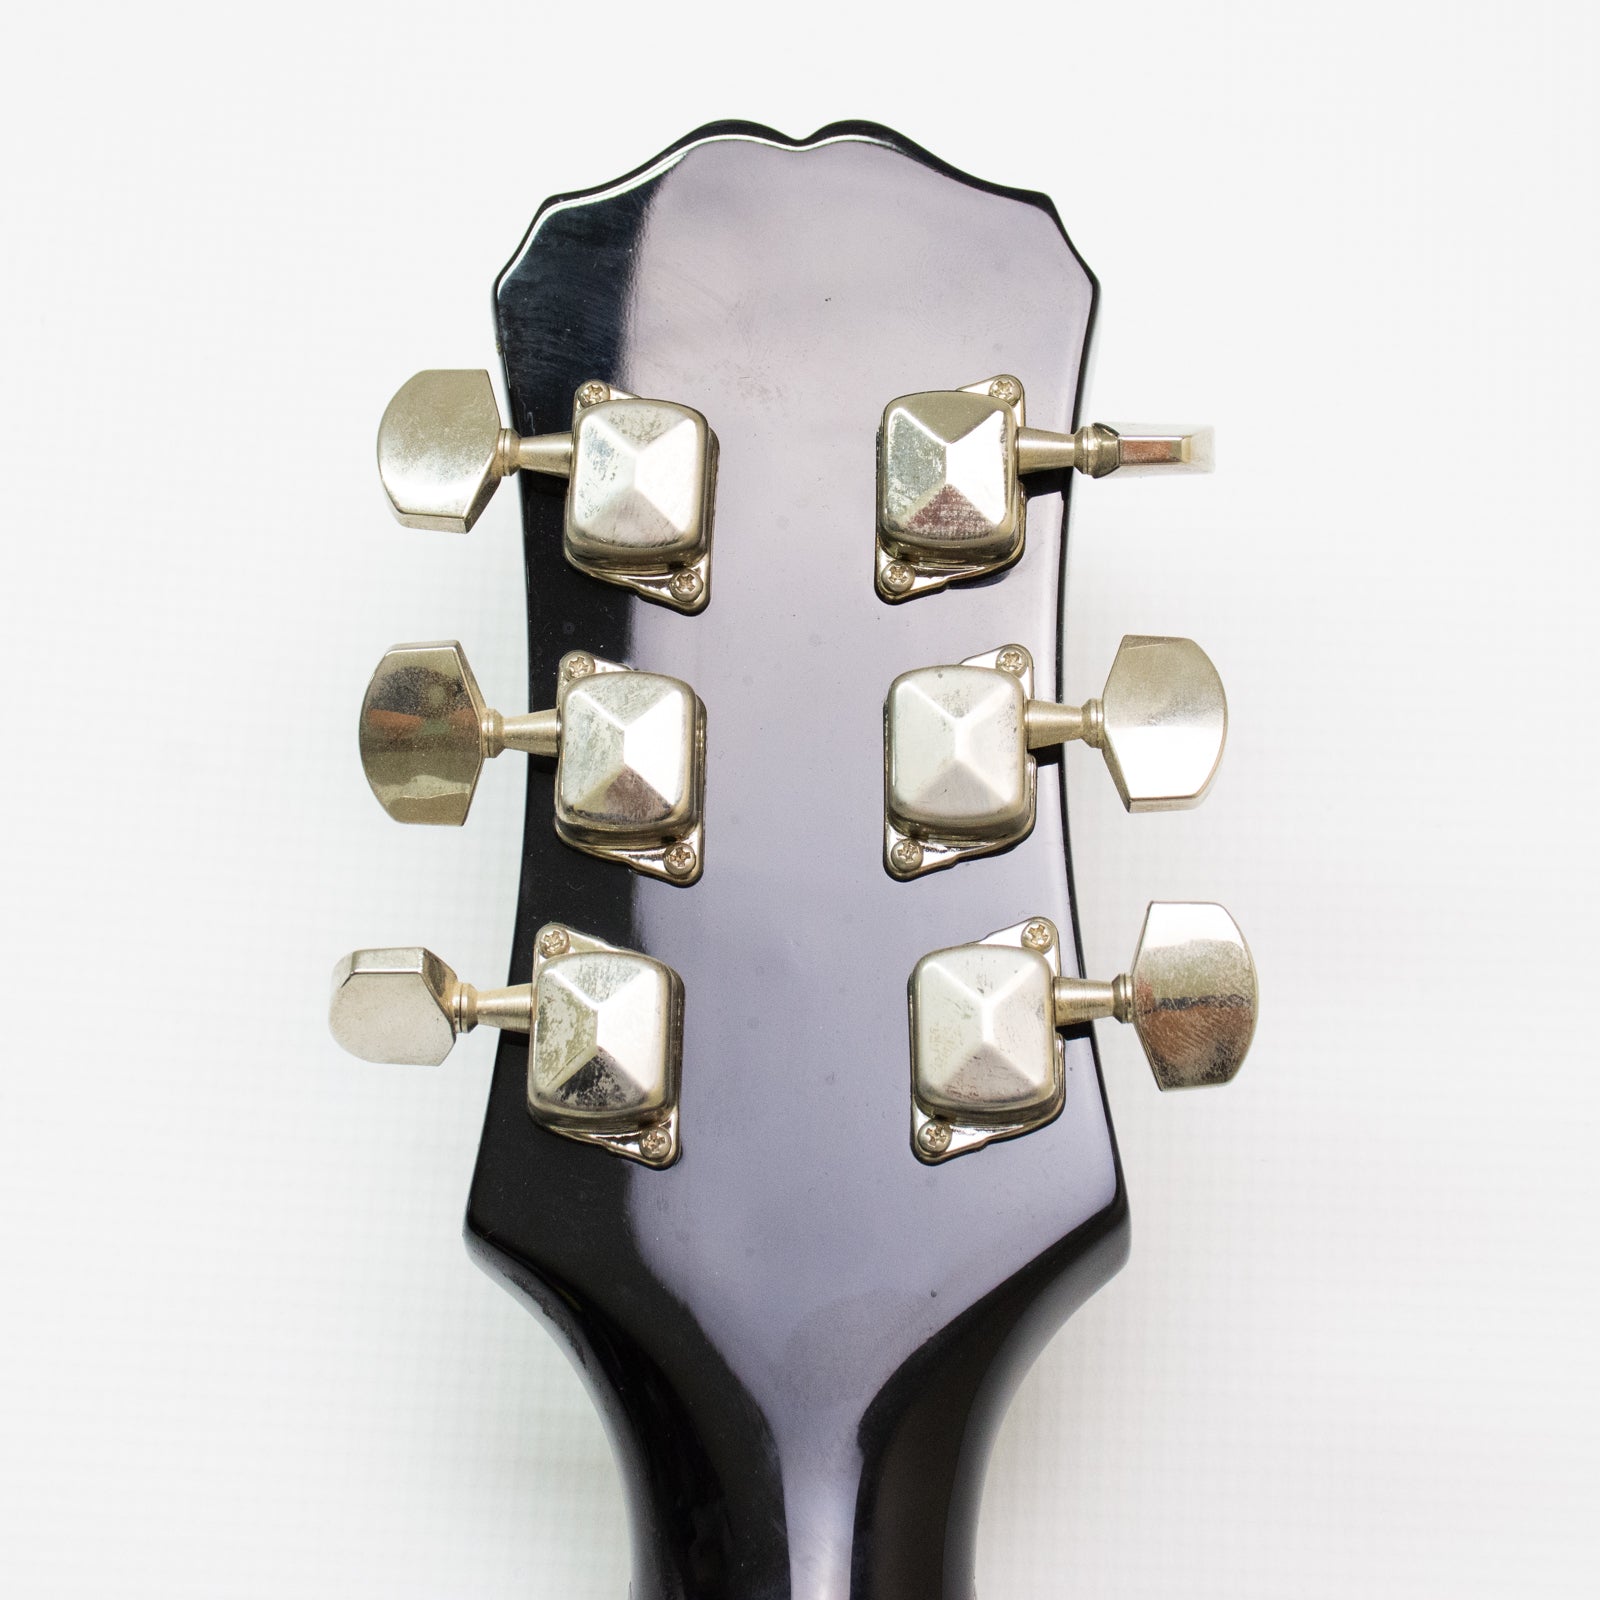 Epiphone Special II Sunburst - 6 String Electric Guitar